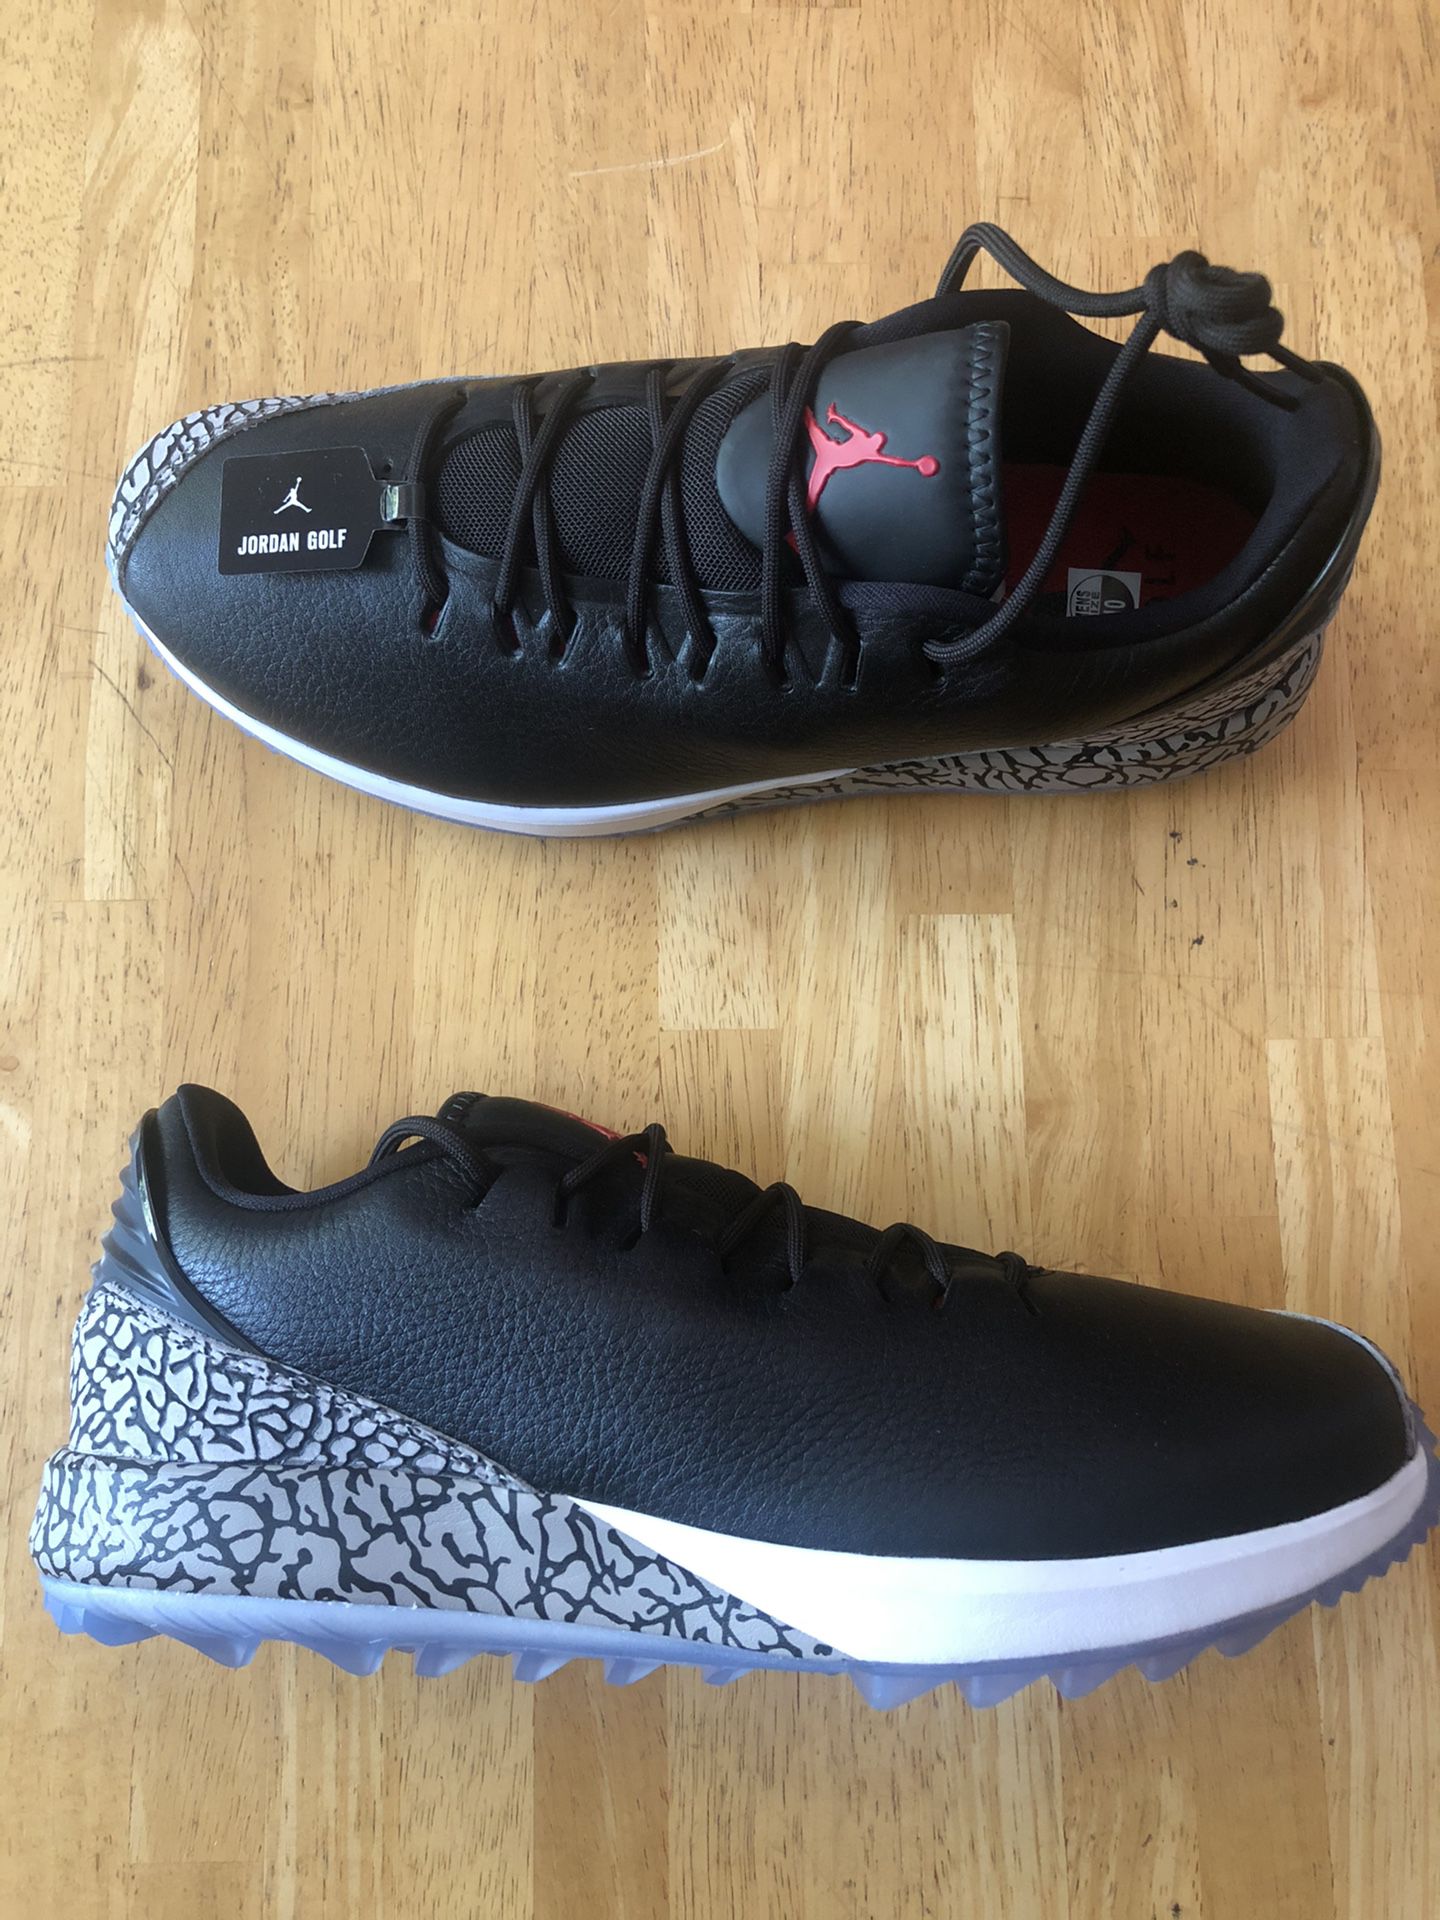 Brand new Nike air Jordan ADG golf shoes cleats men’s size 9, 10, 11